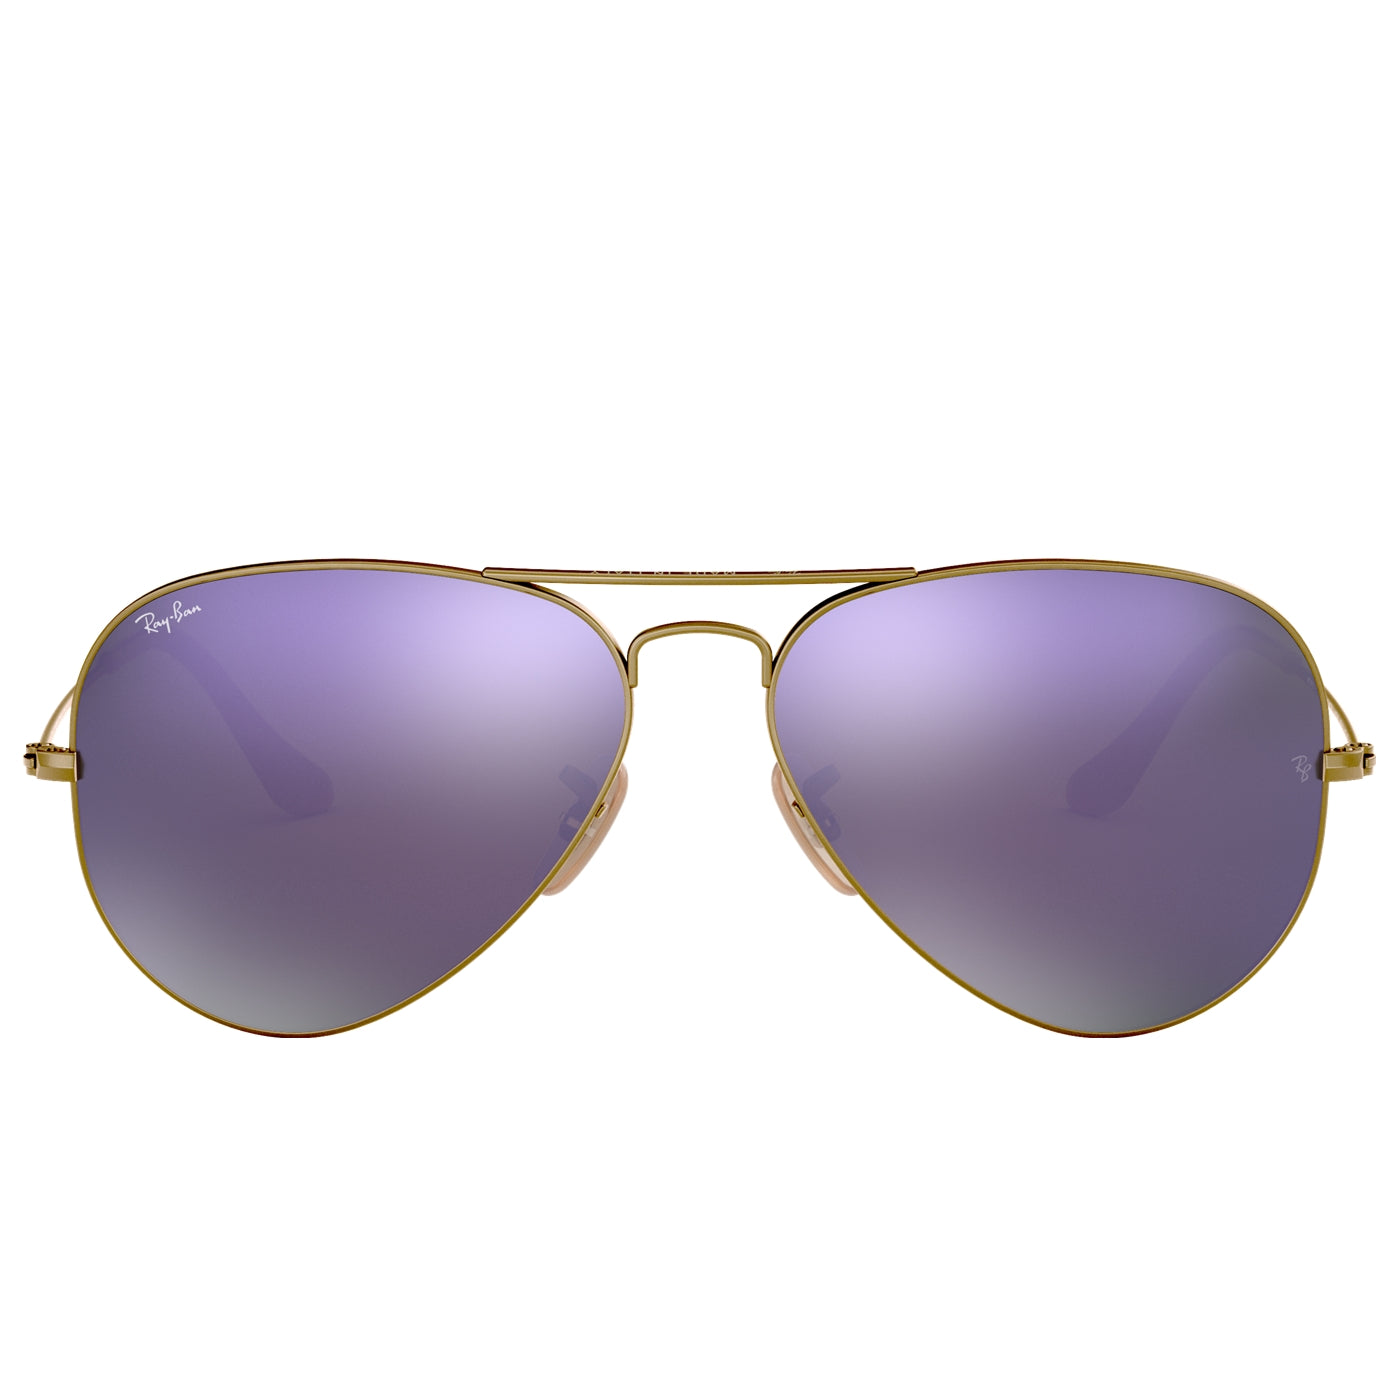 Ray-Ban Aviator Lilac Mirror Crystal Mirrored Aviator/Pilot Men's Sunglasses RB3025 167/4K 58